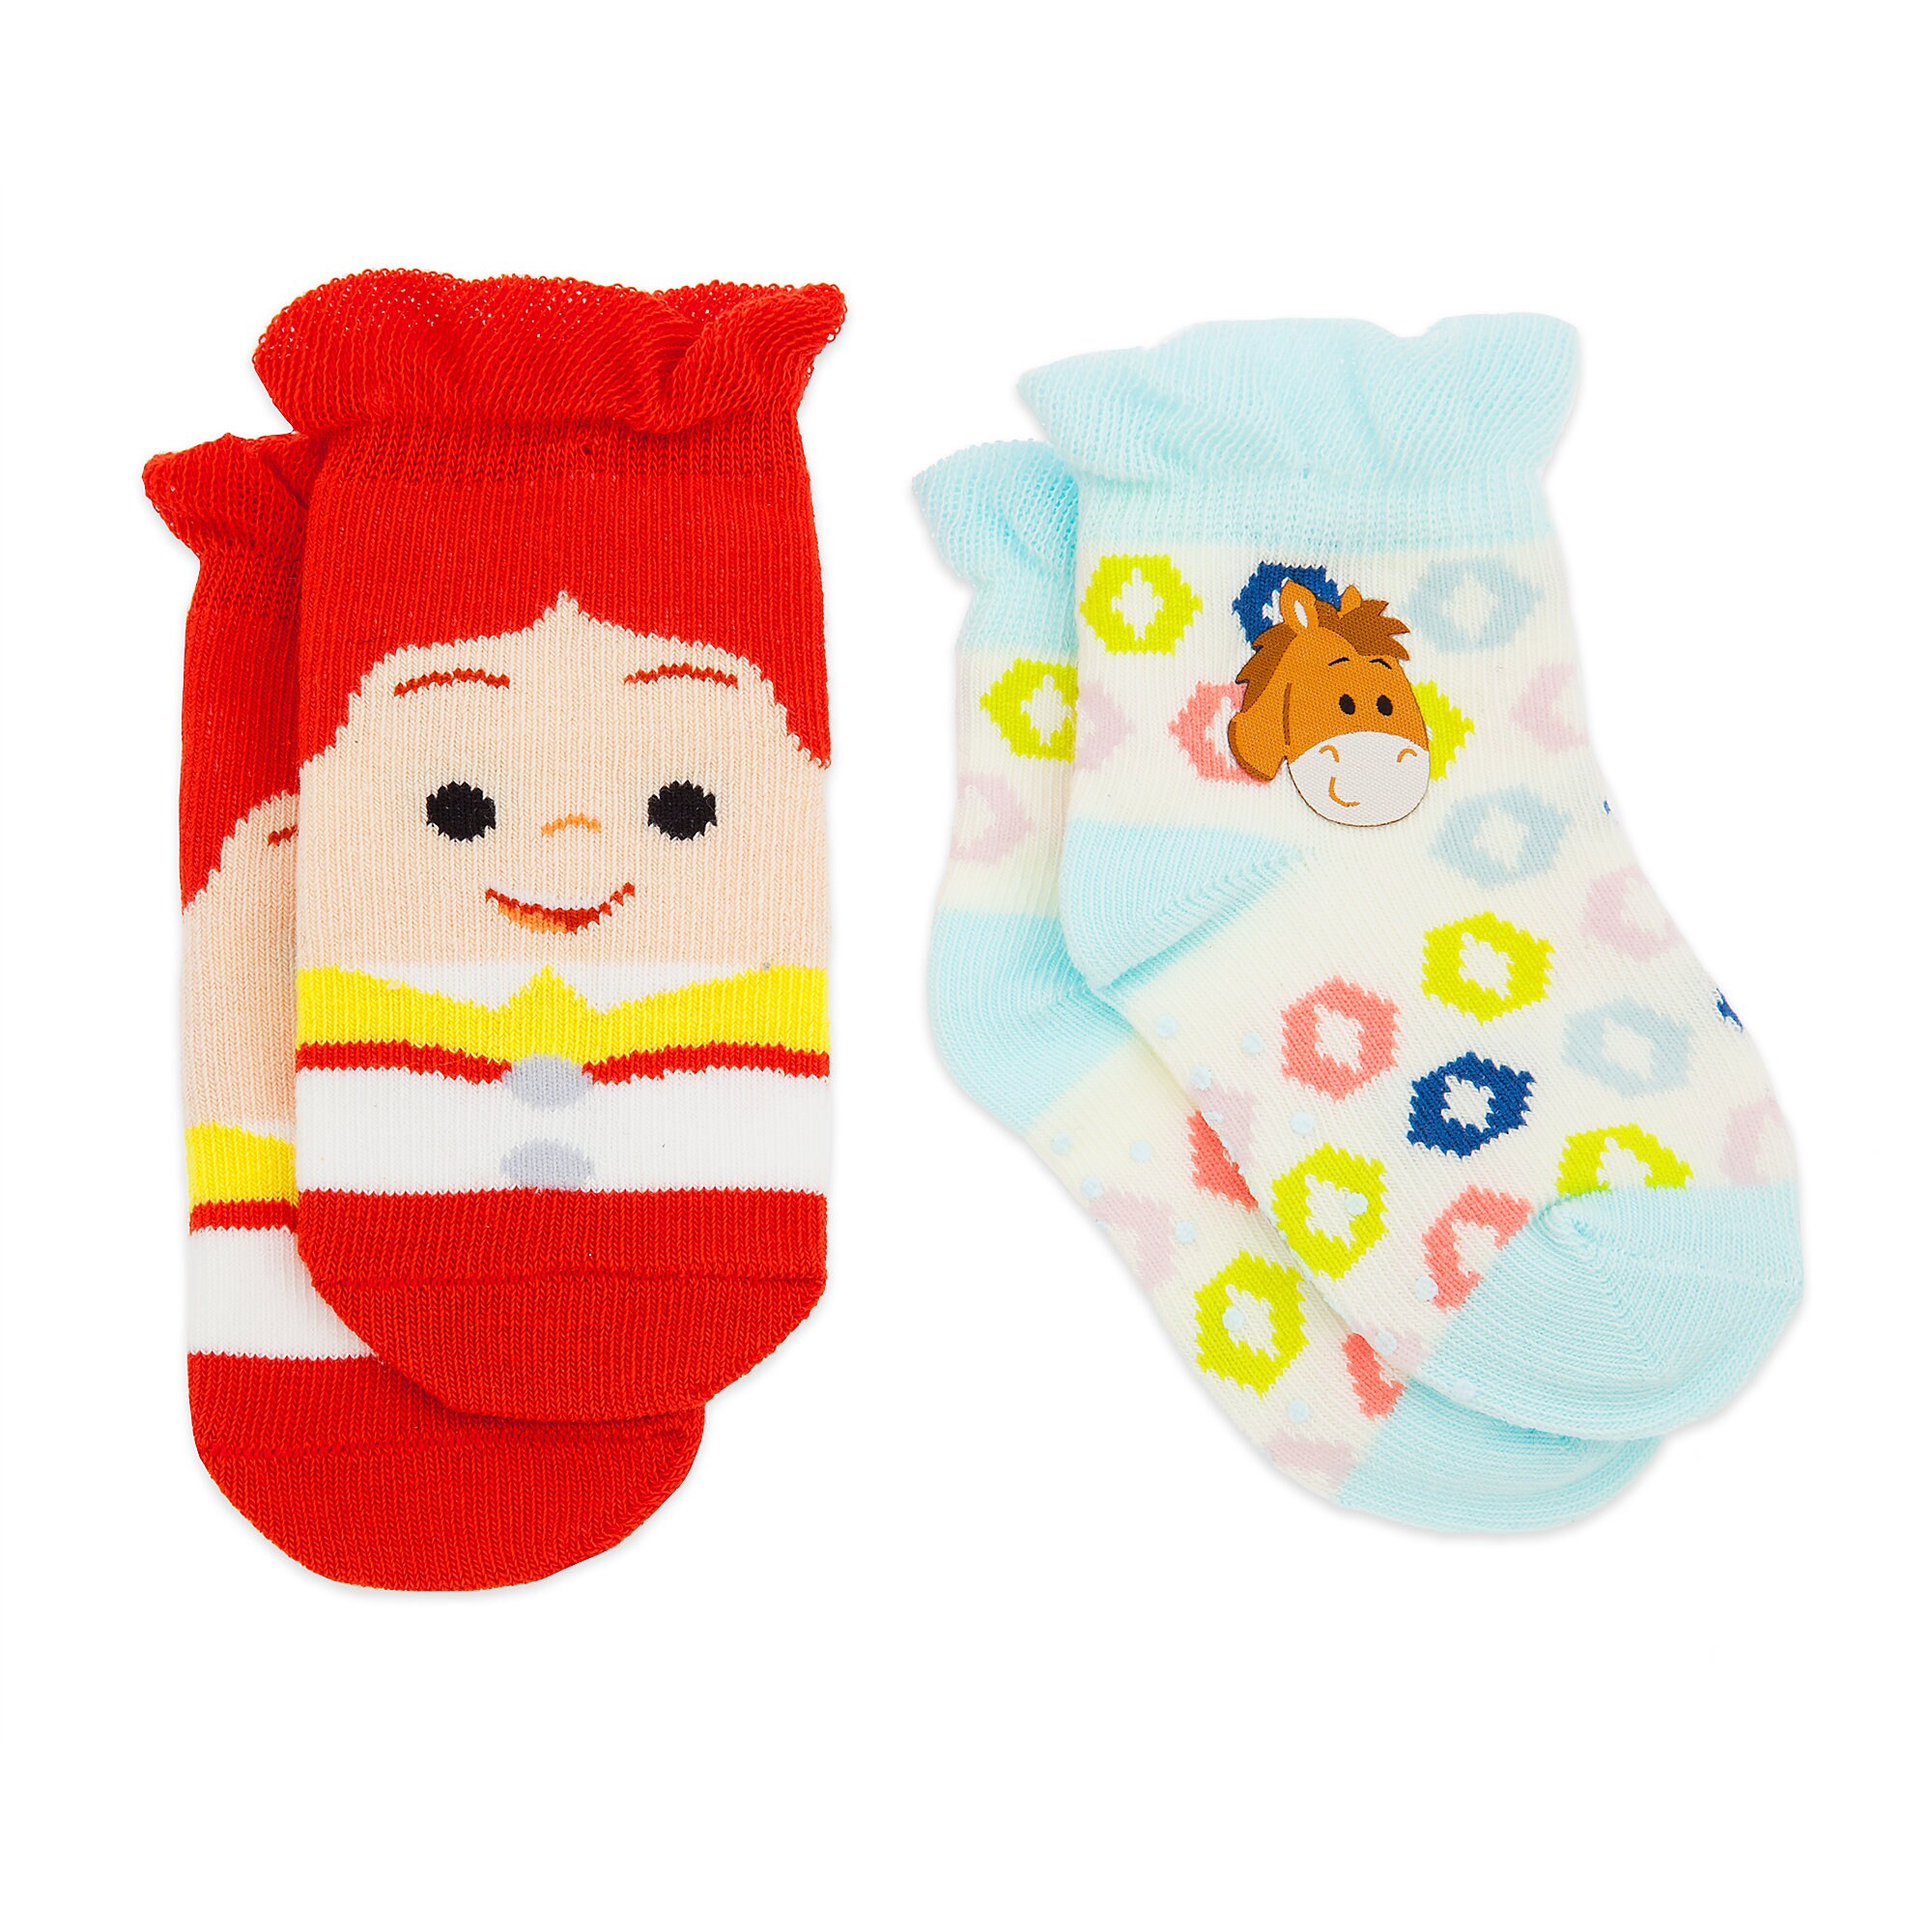 Jessie and Bullseye Socks Set for Baby - Toy Story